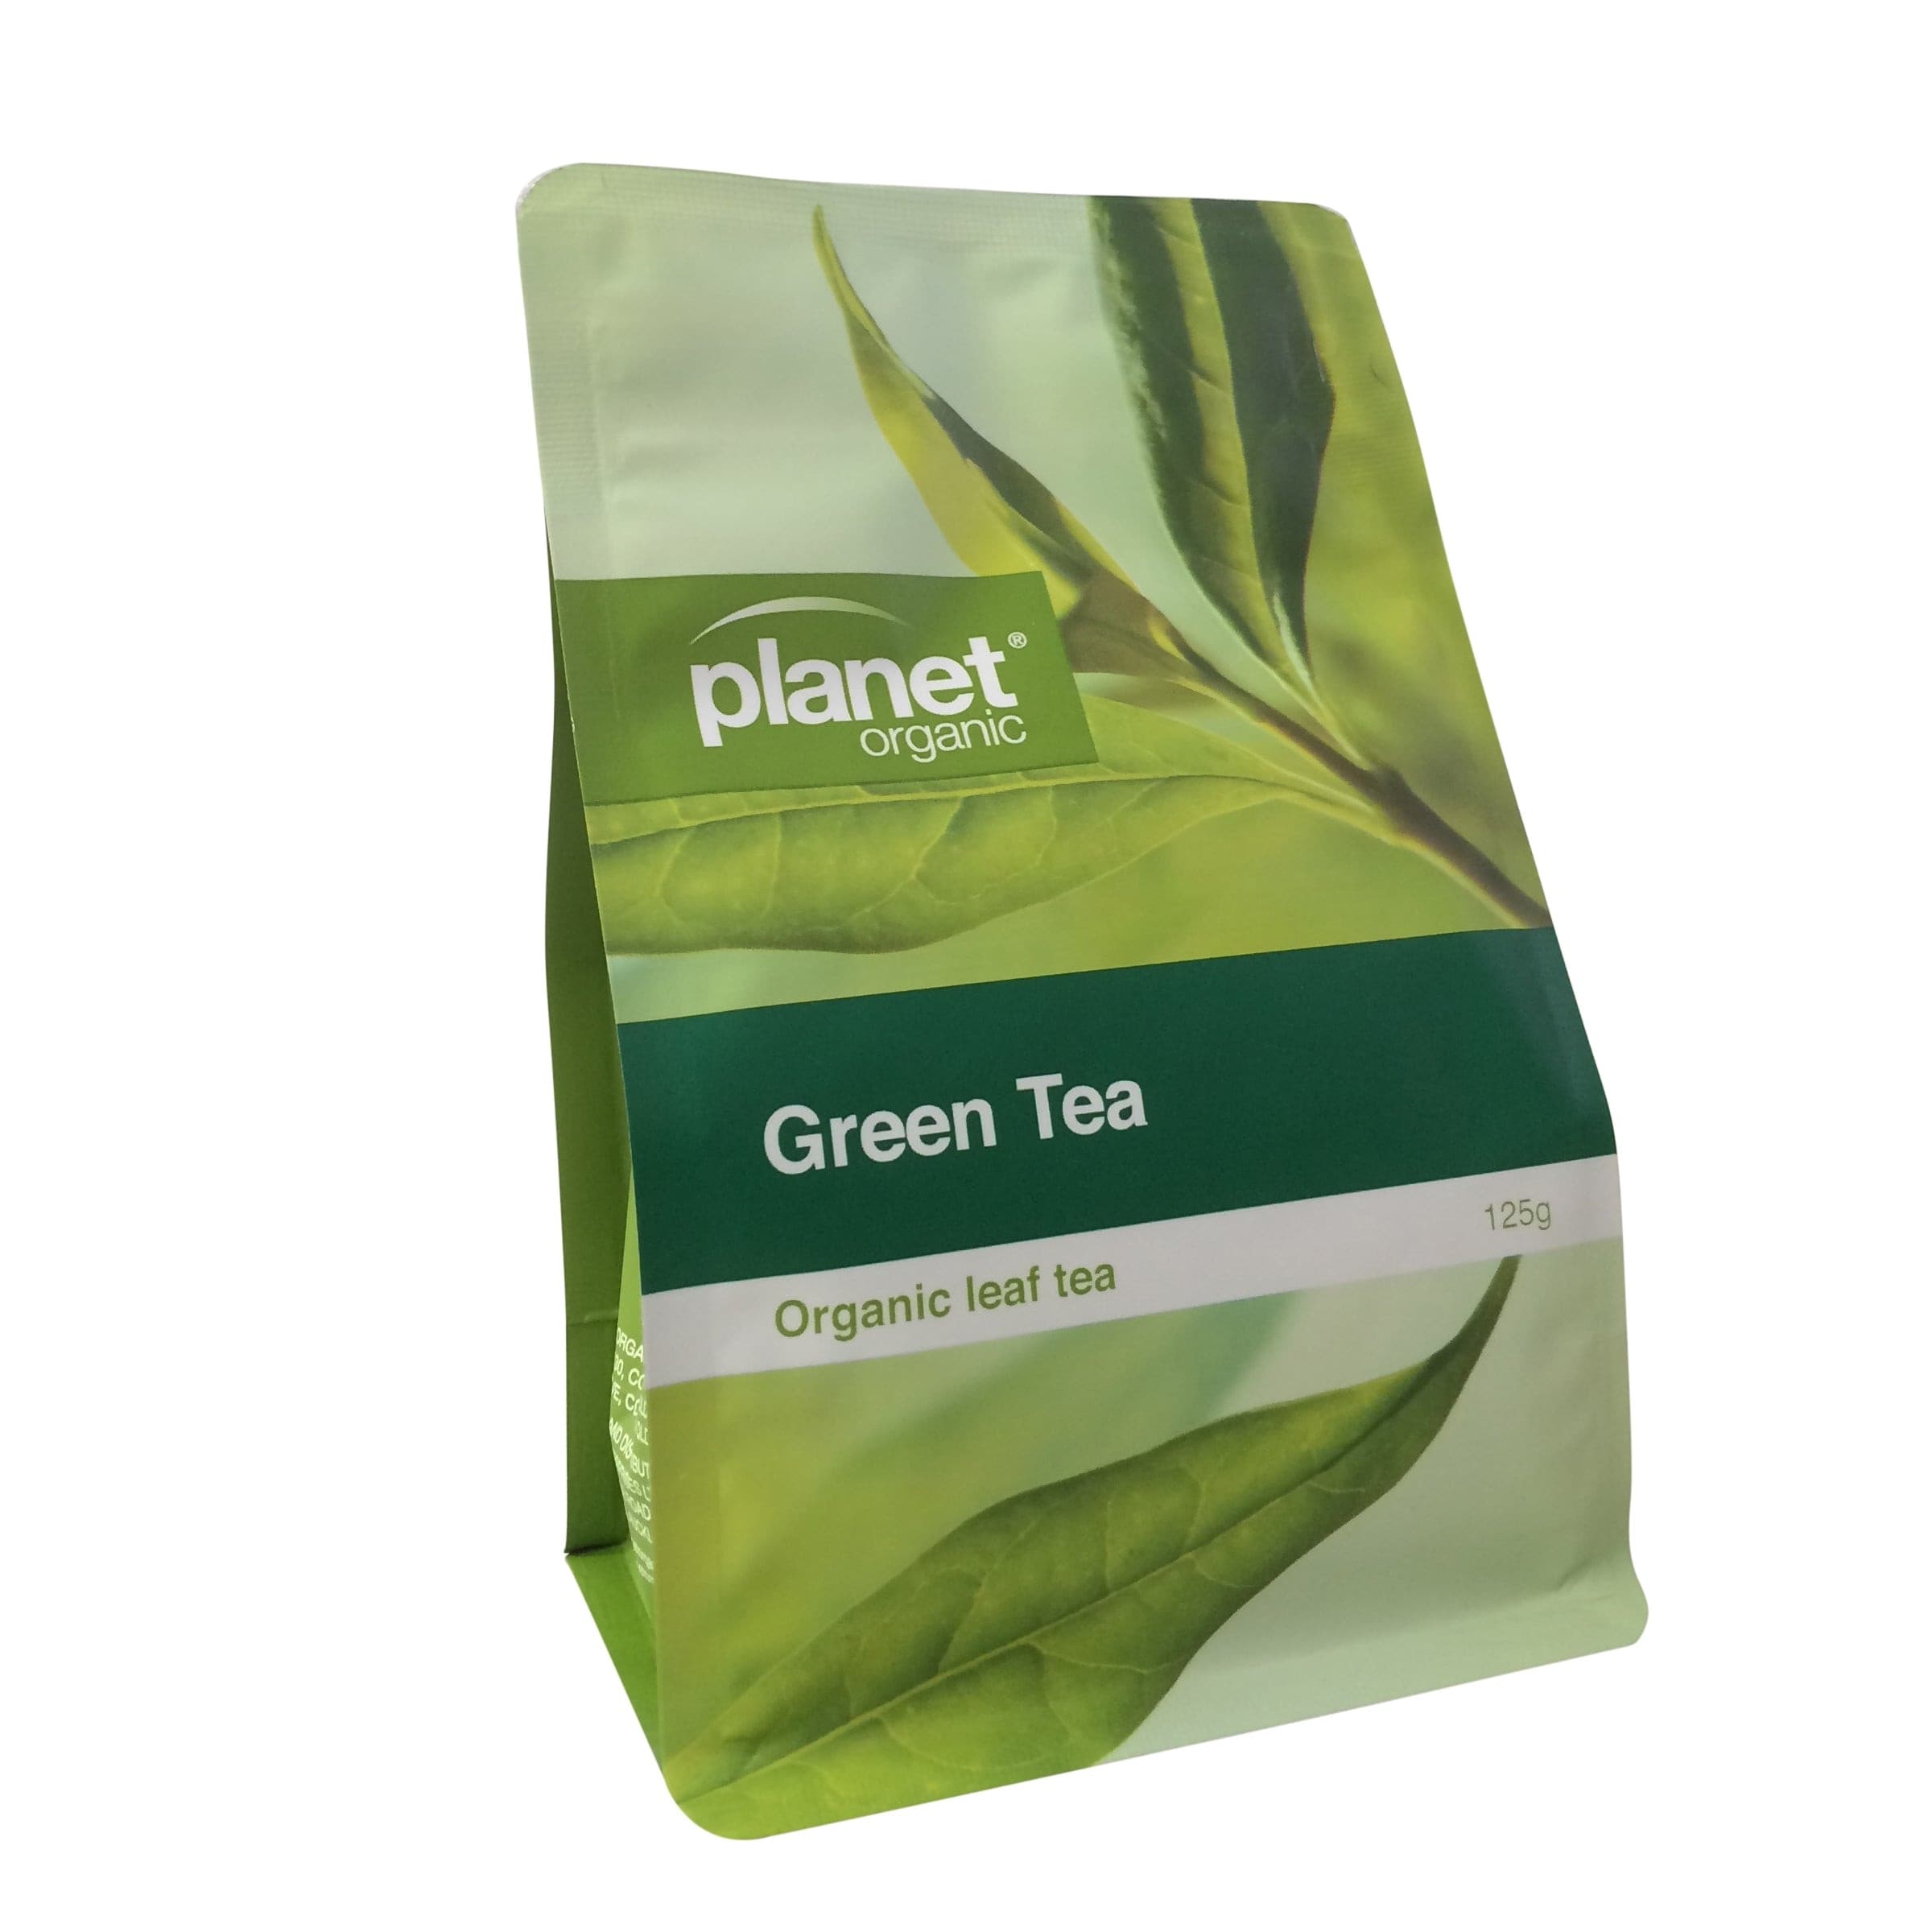 Planet Organic Herbal Loose Leaf Green Tea 125g-The Living Co.